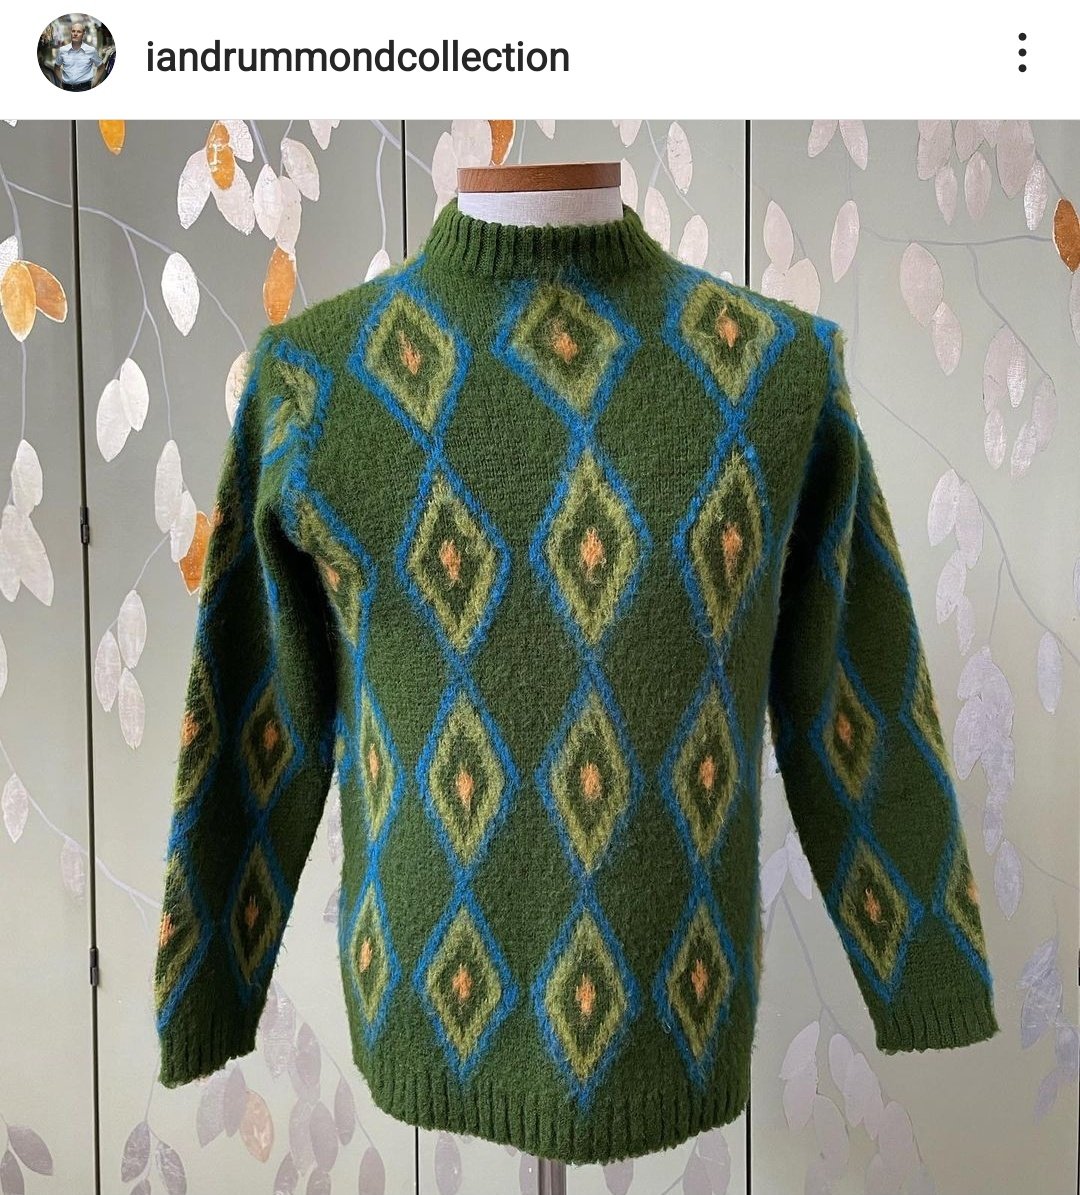 #MattBomer 's green sweater in #FellowTravelers 😊
  
📸 iandrummondcollection IG
instagram.com/p/Cs1Rh1QgkWd/…